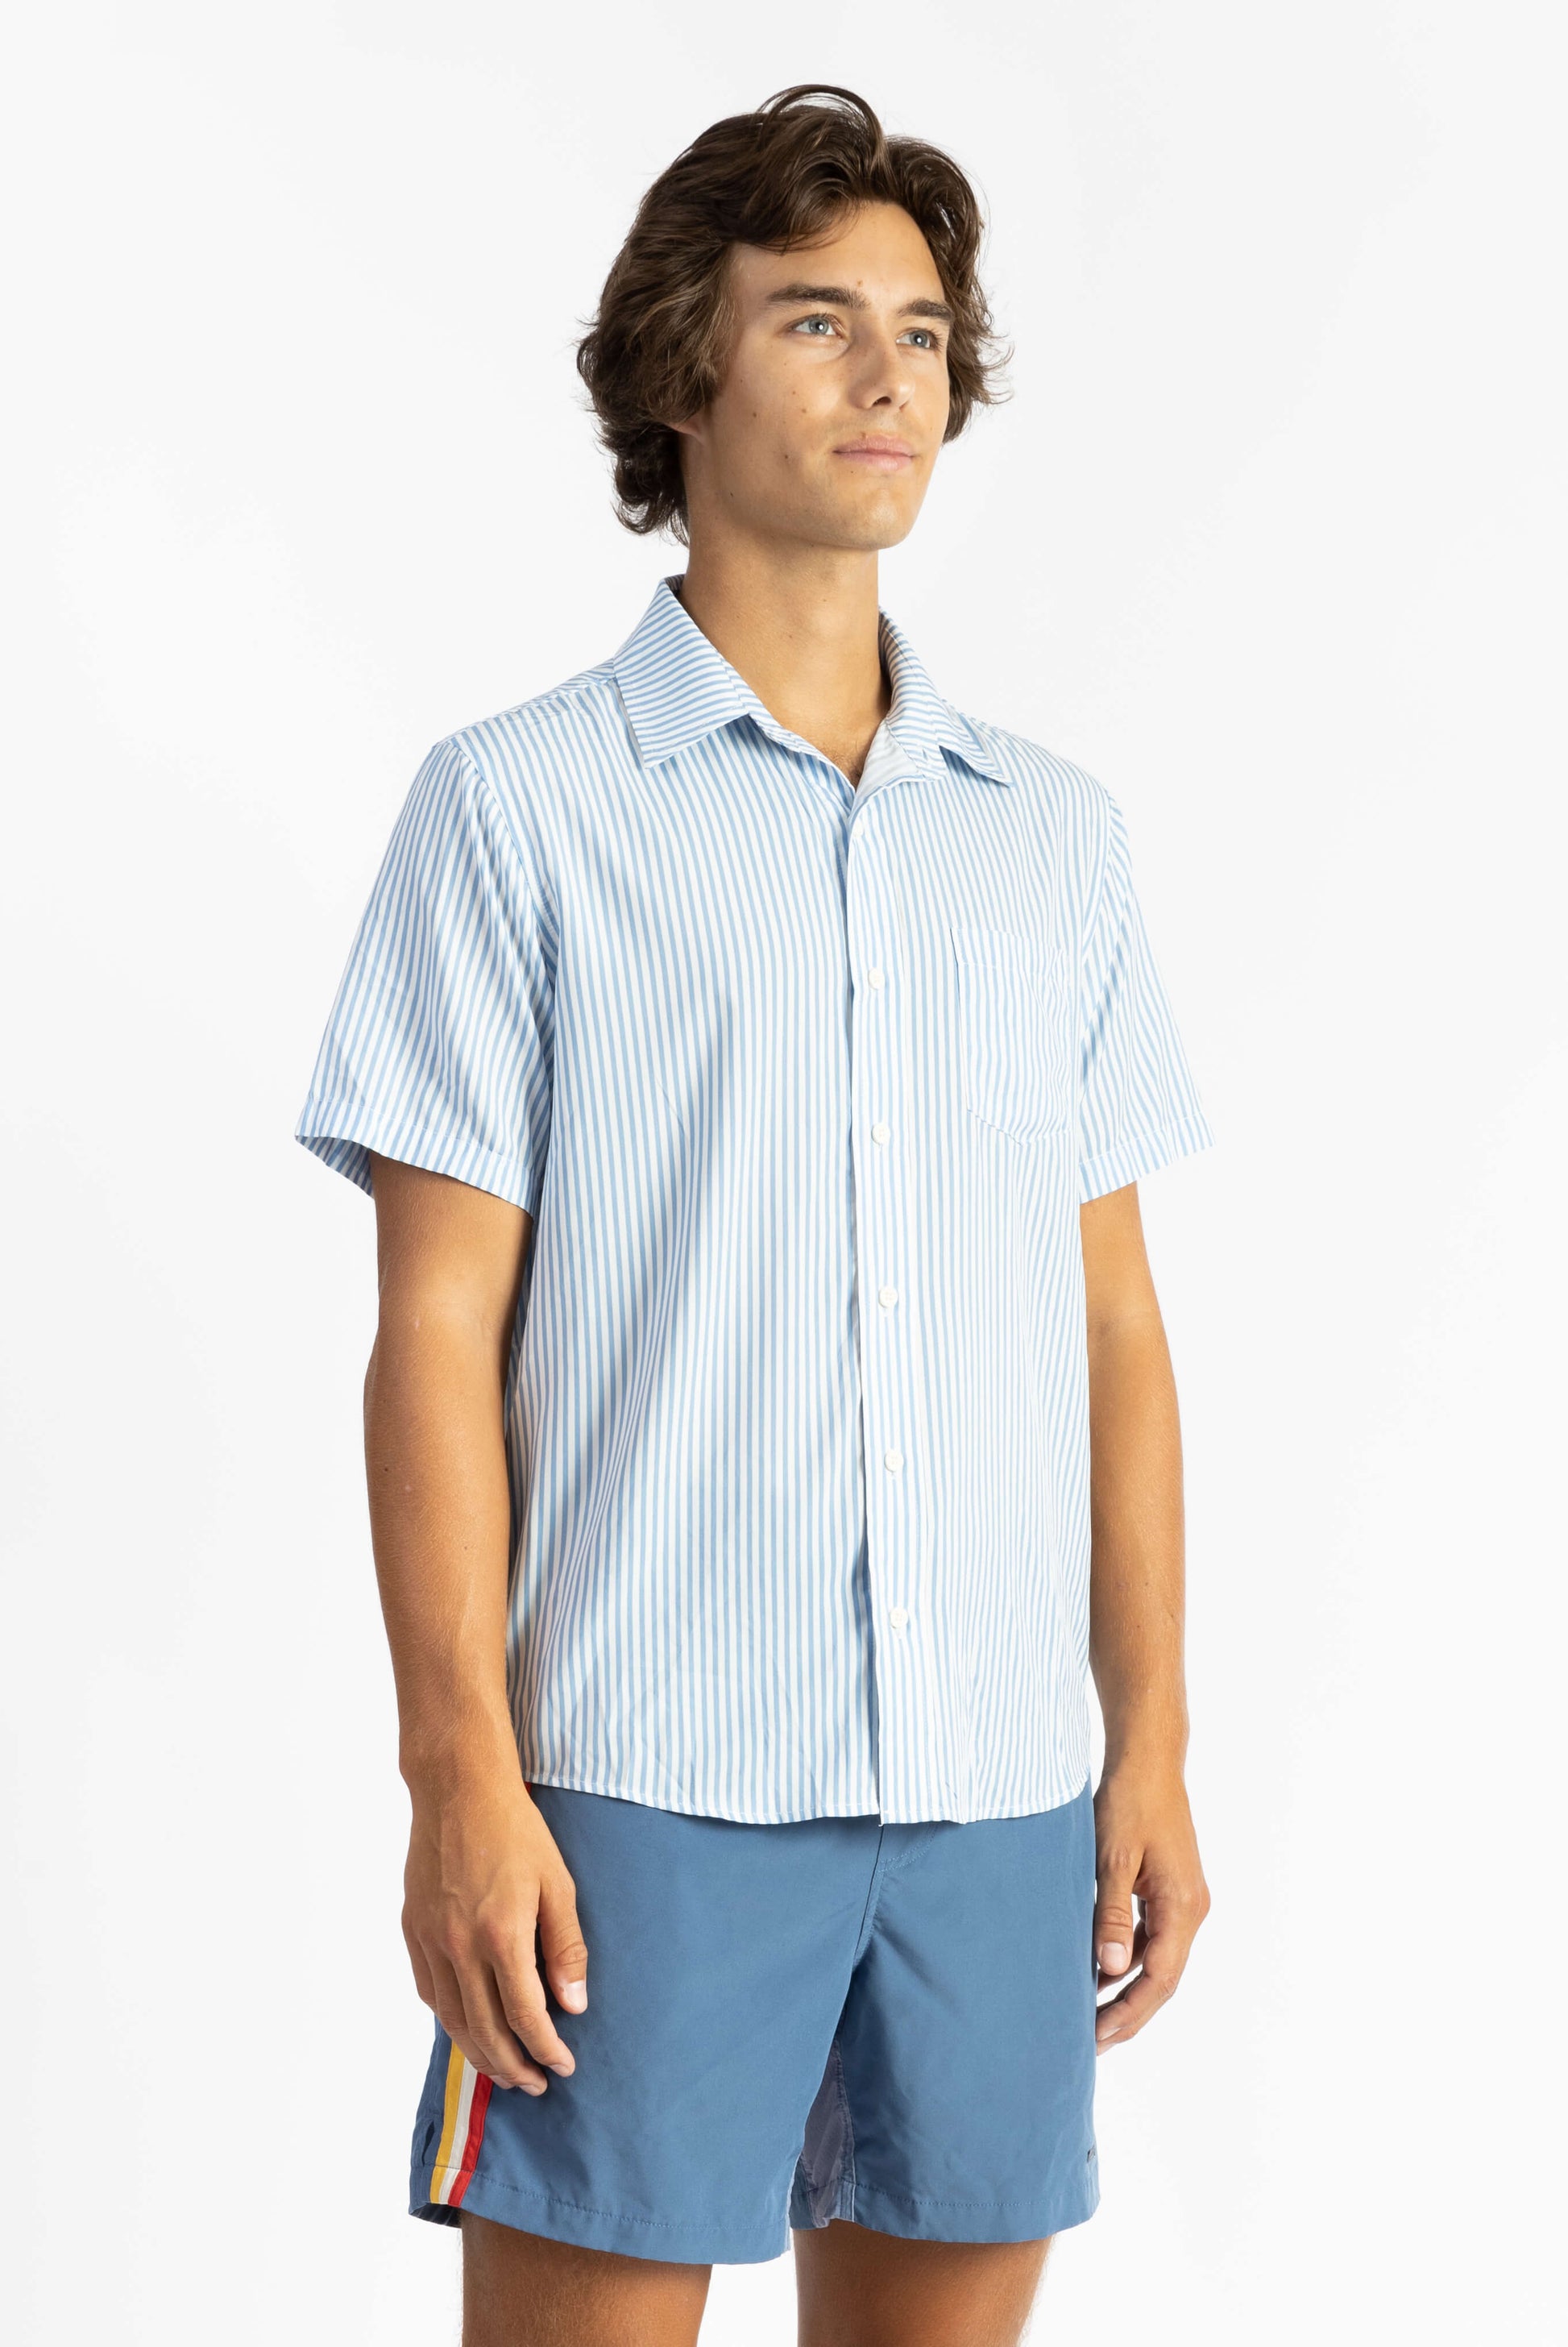 a man wearing a formal light weight Blue Striped Breeze Button Up shirt with blue shorts